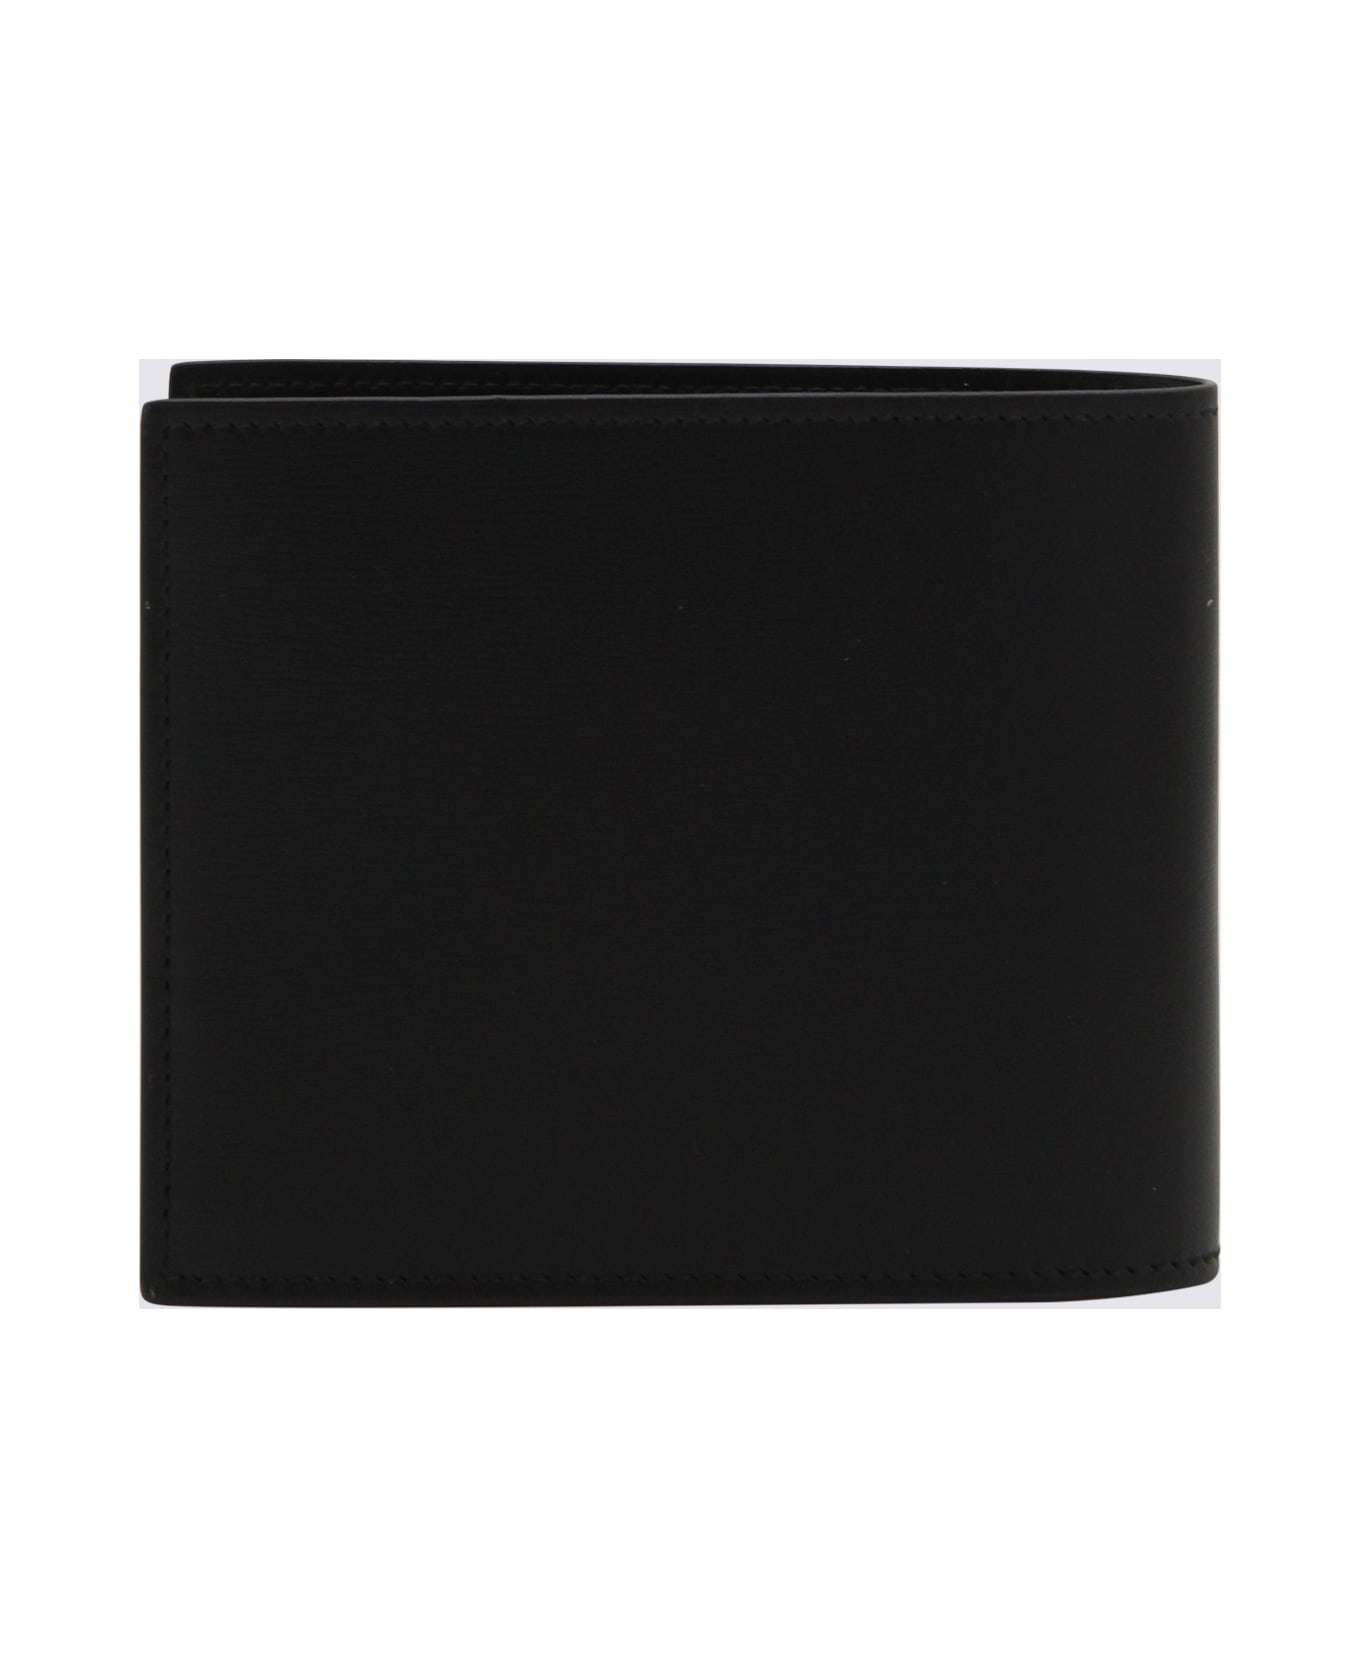 Ferragamo Black Leather Wallet - Black 財布